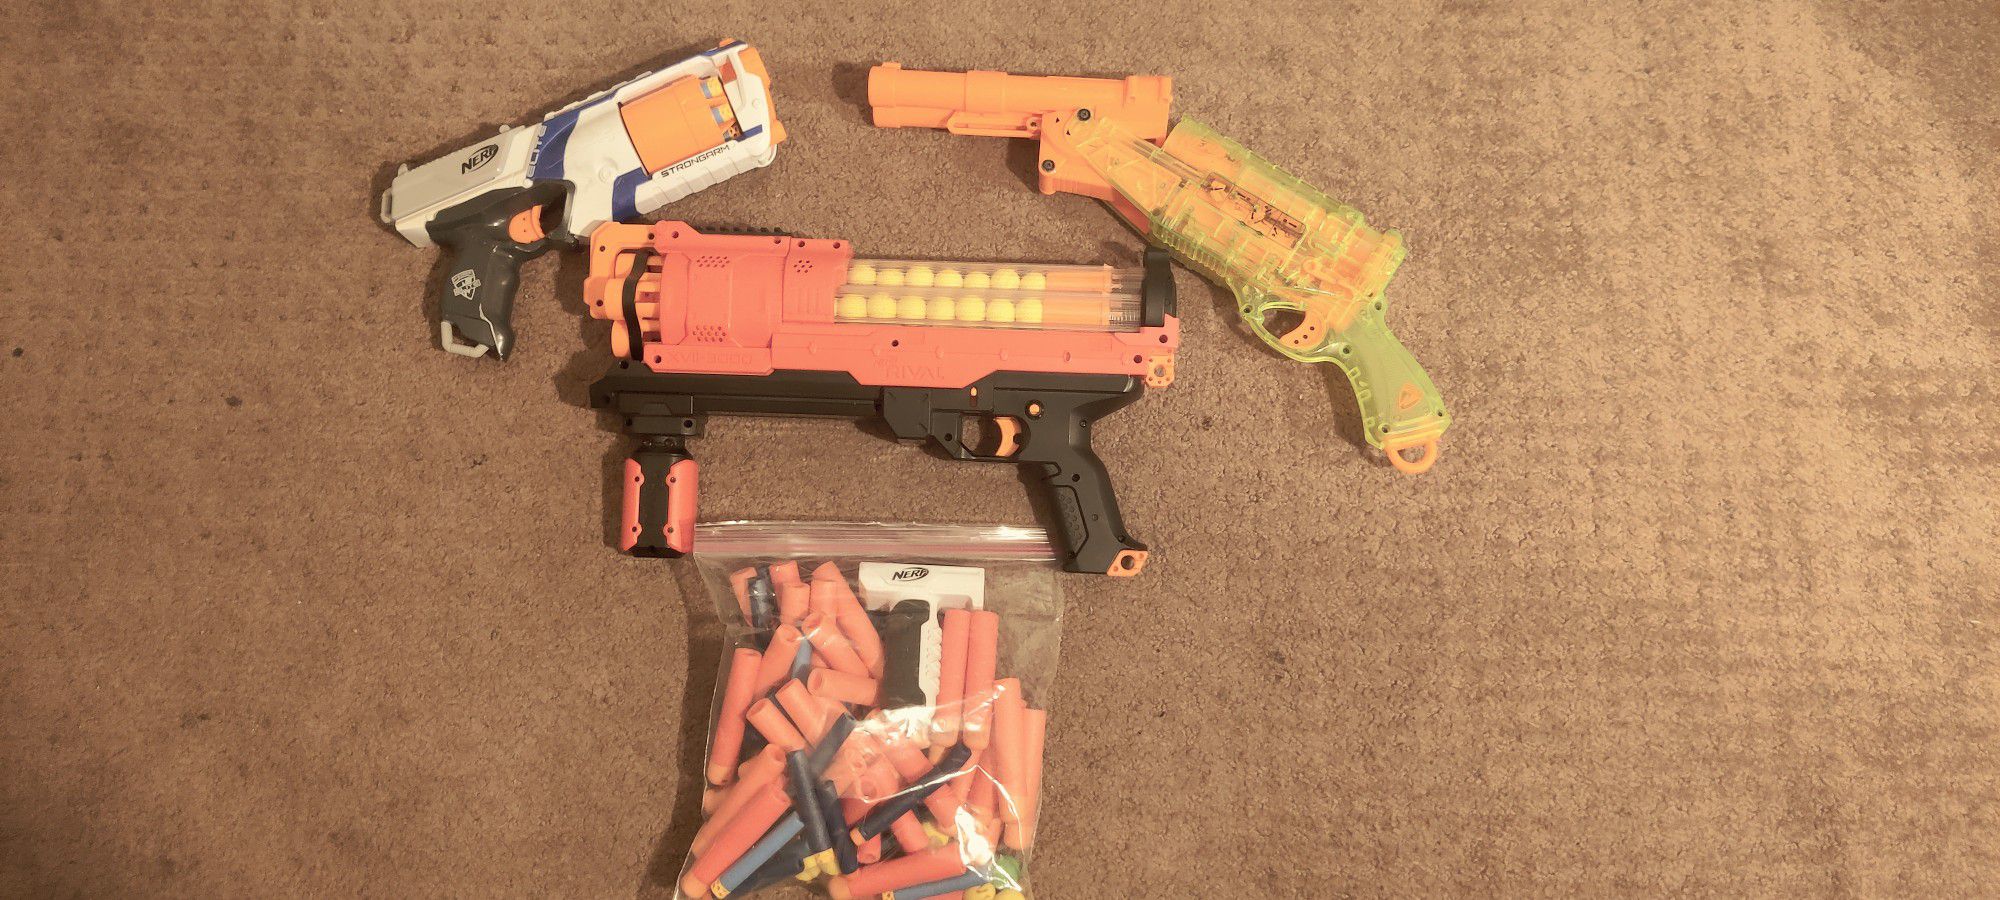 Nerf Guns 3 Pieces Plus Different Nerf Ammo 